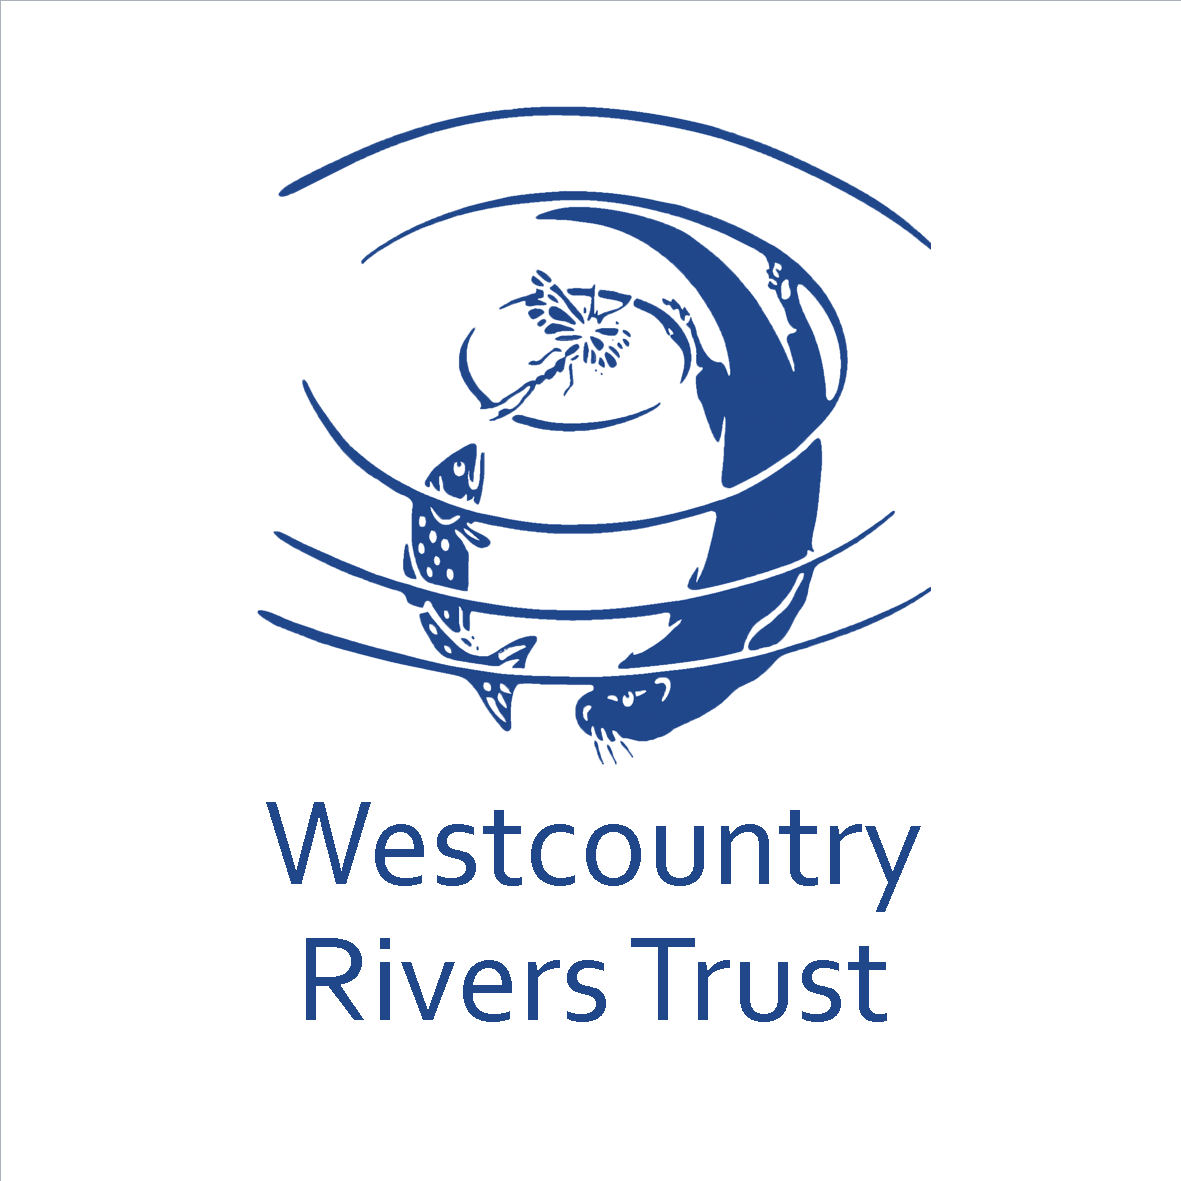 Westcountry Rivers Trust